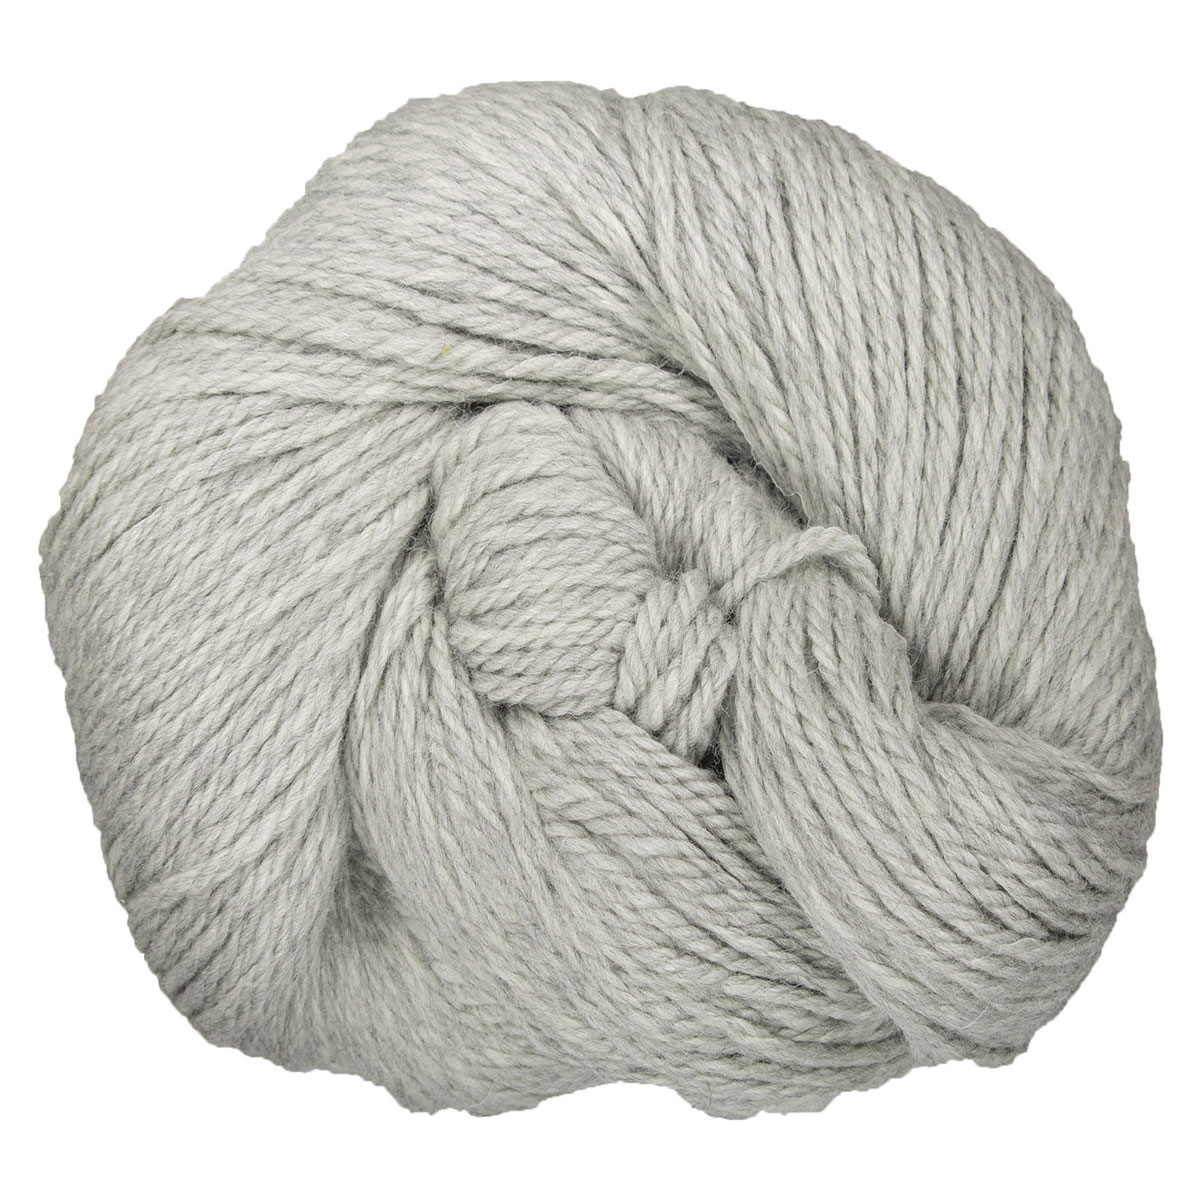 Cascade 220 Yarn in Silver Grey (8401) at Fabulous Yarn